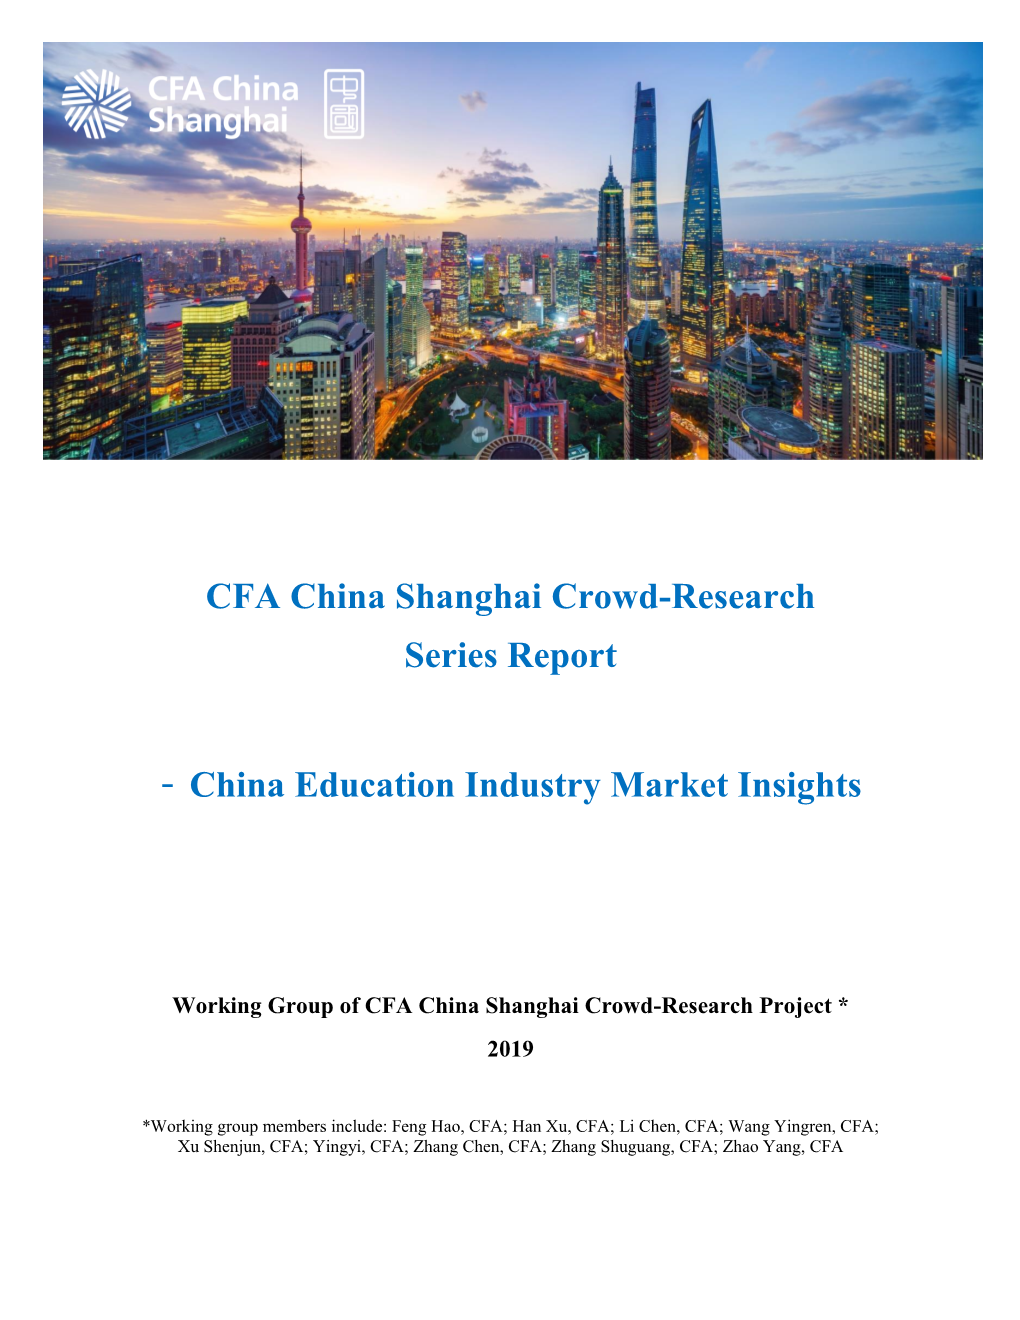 China Education Industry Market Insights